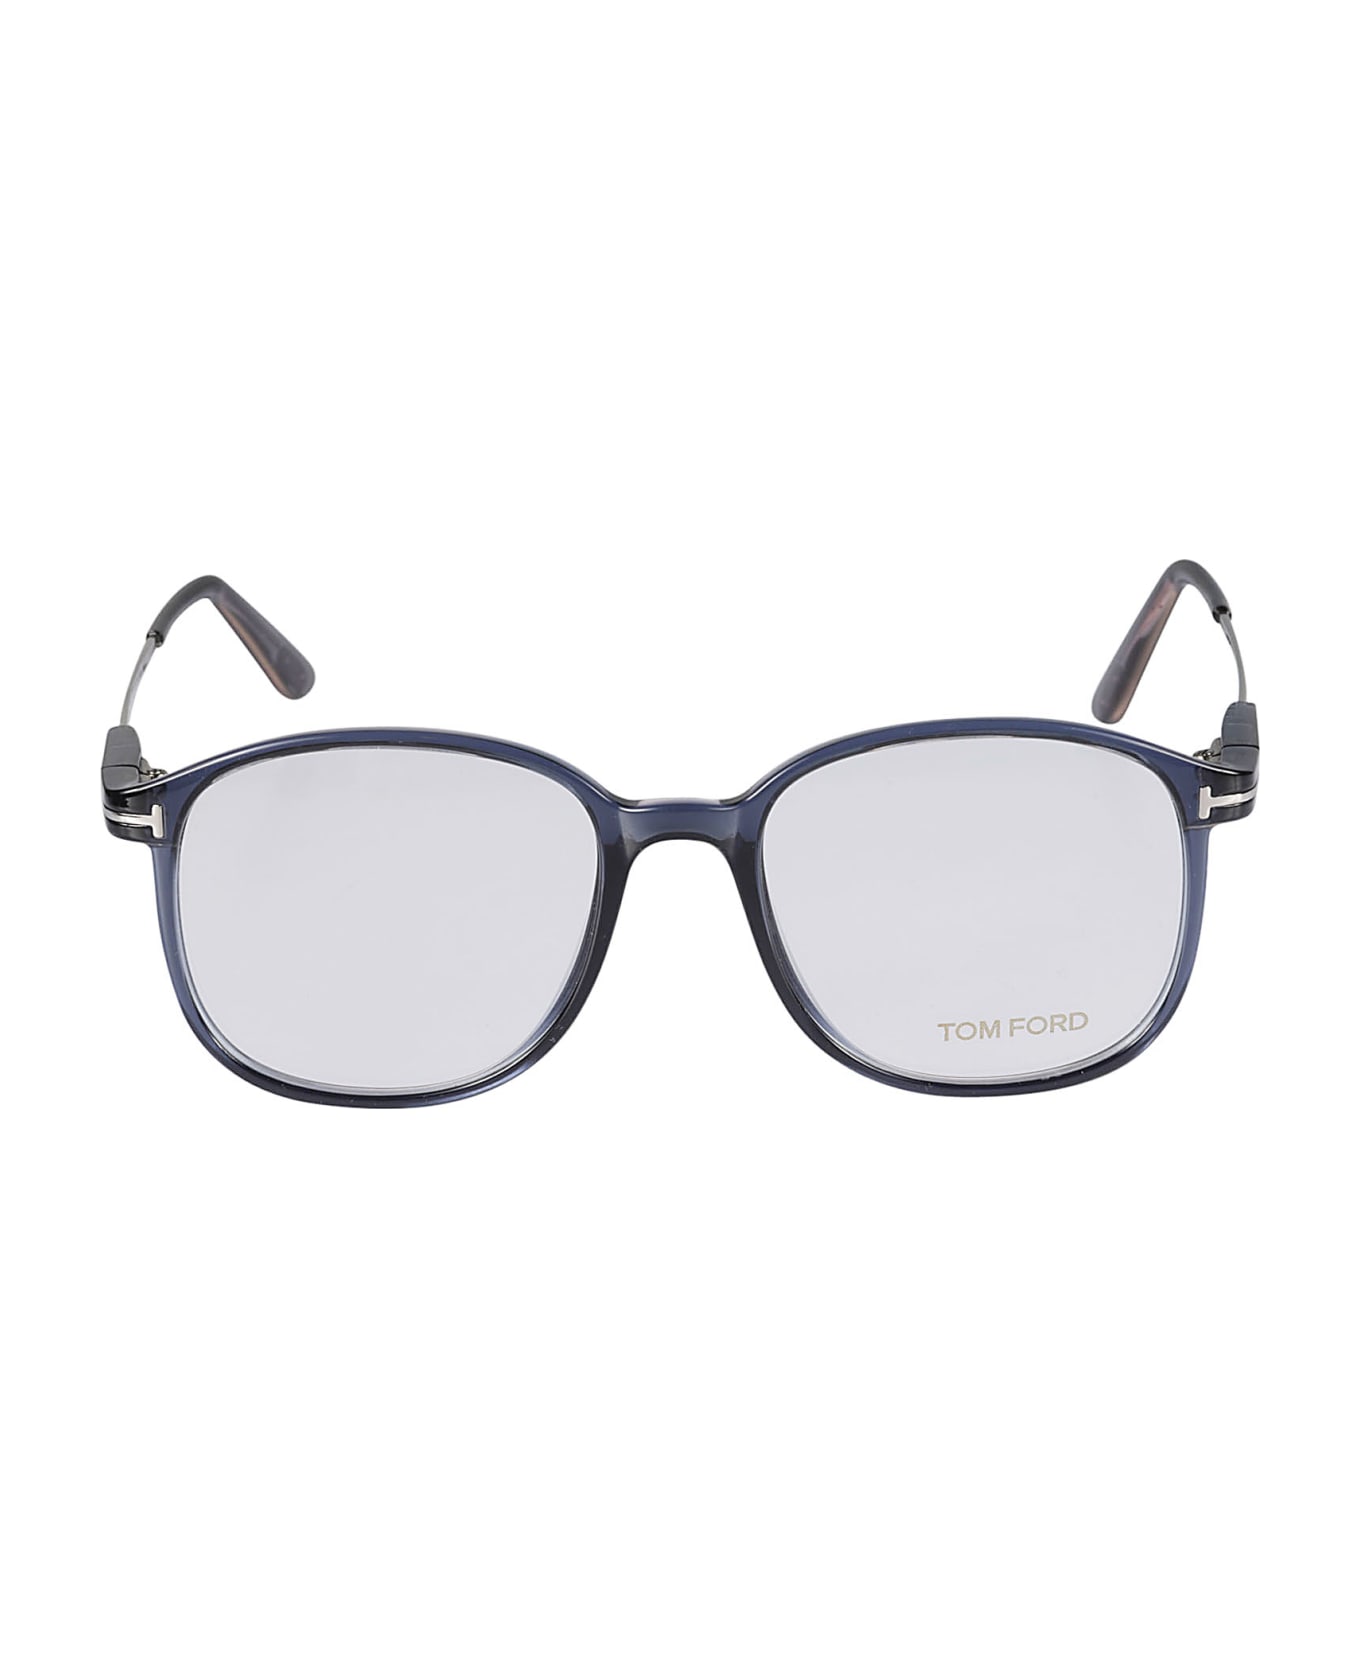 Tom Ford Eyewear Round Clear Lens Glasses - 090 アイウェア